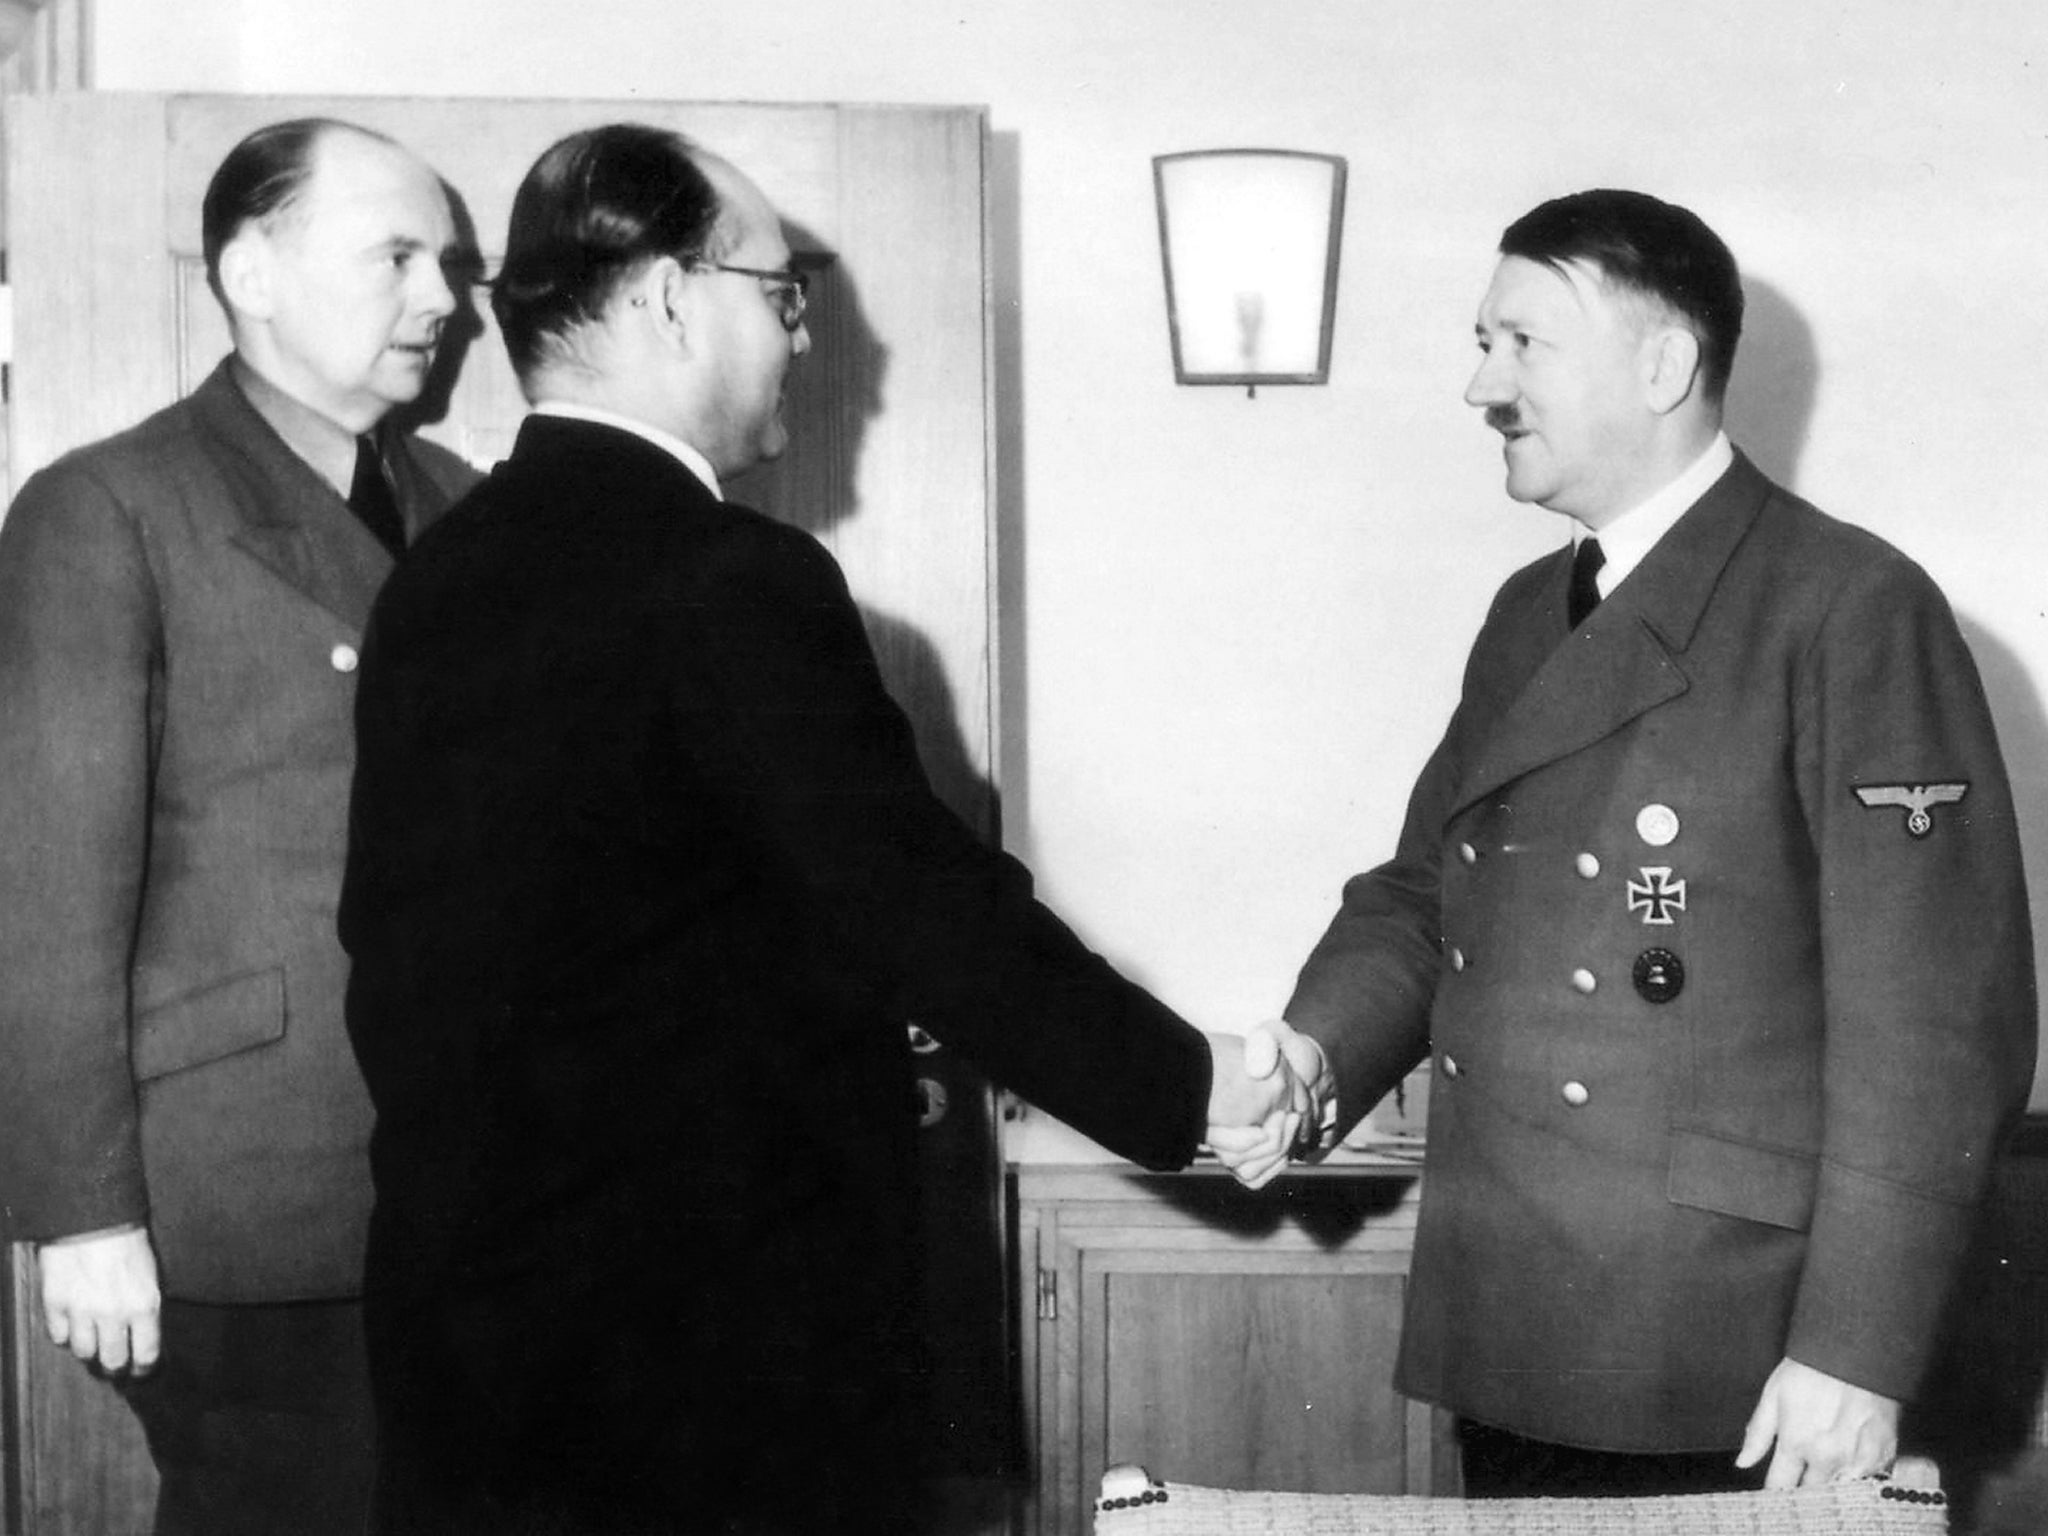 Indian nationalist leader Chandra Bose meets Adolf Hitler in Berlin in 1942